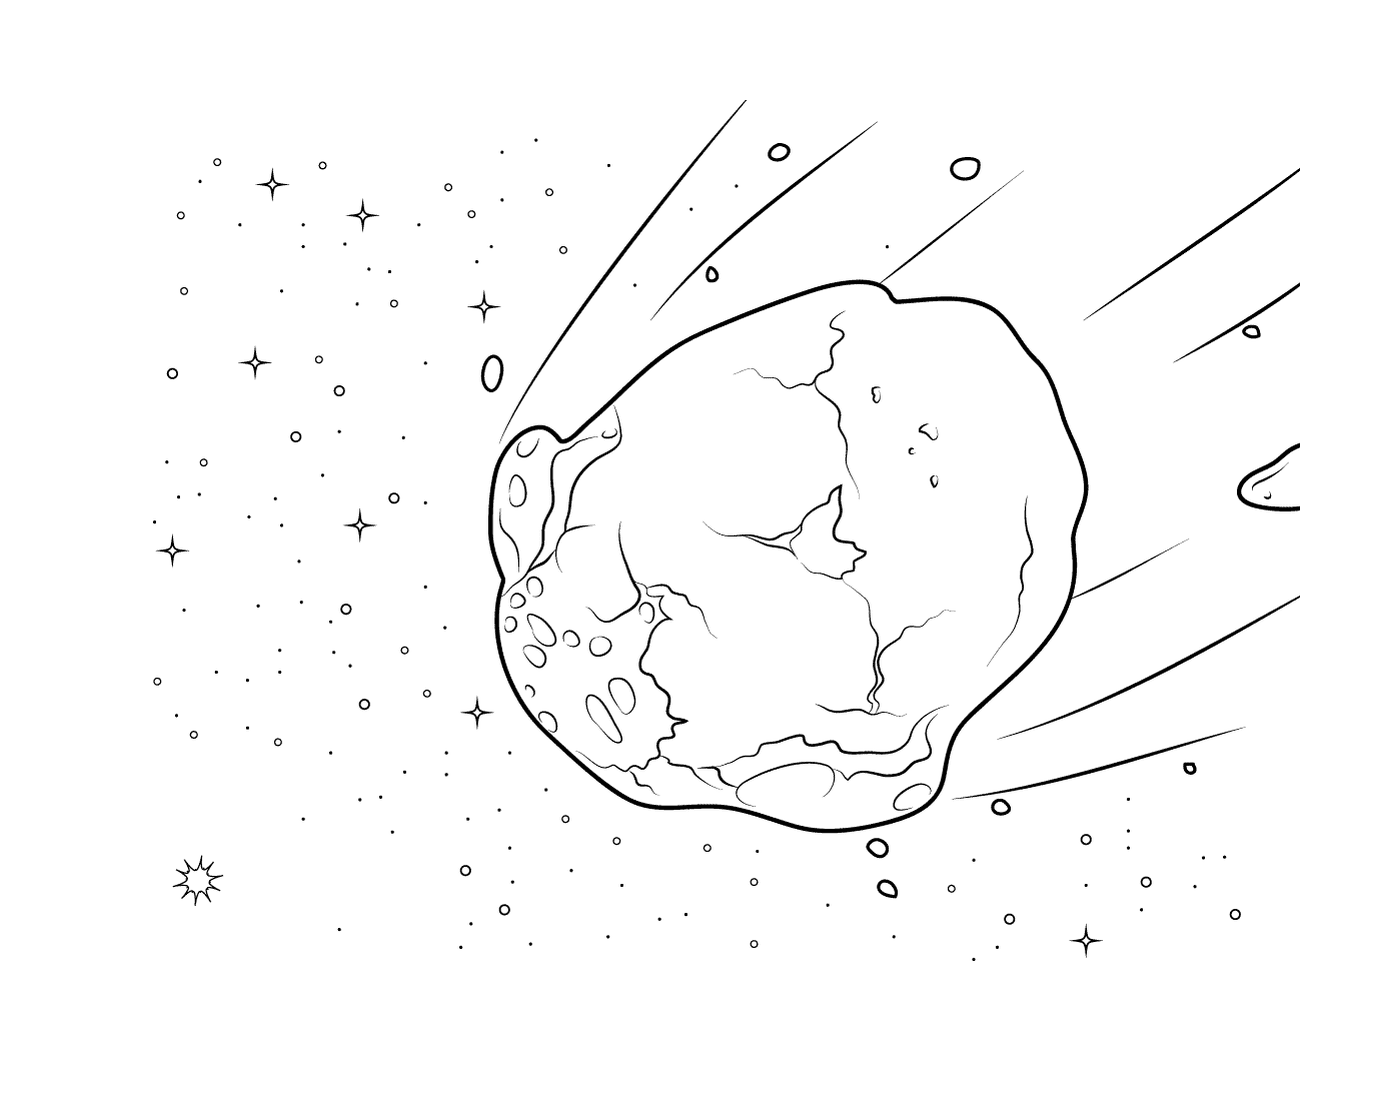  Asteroid am Himmel 